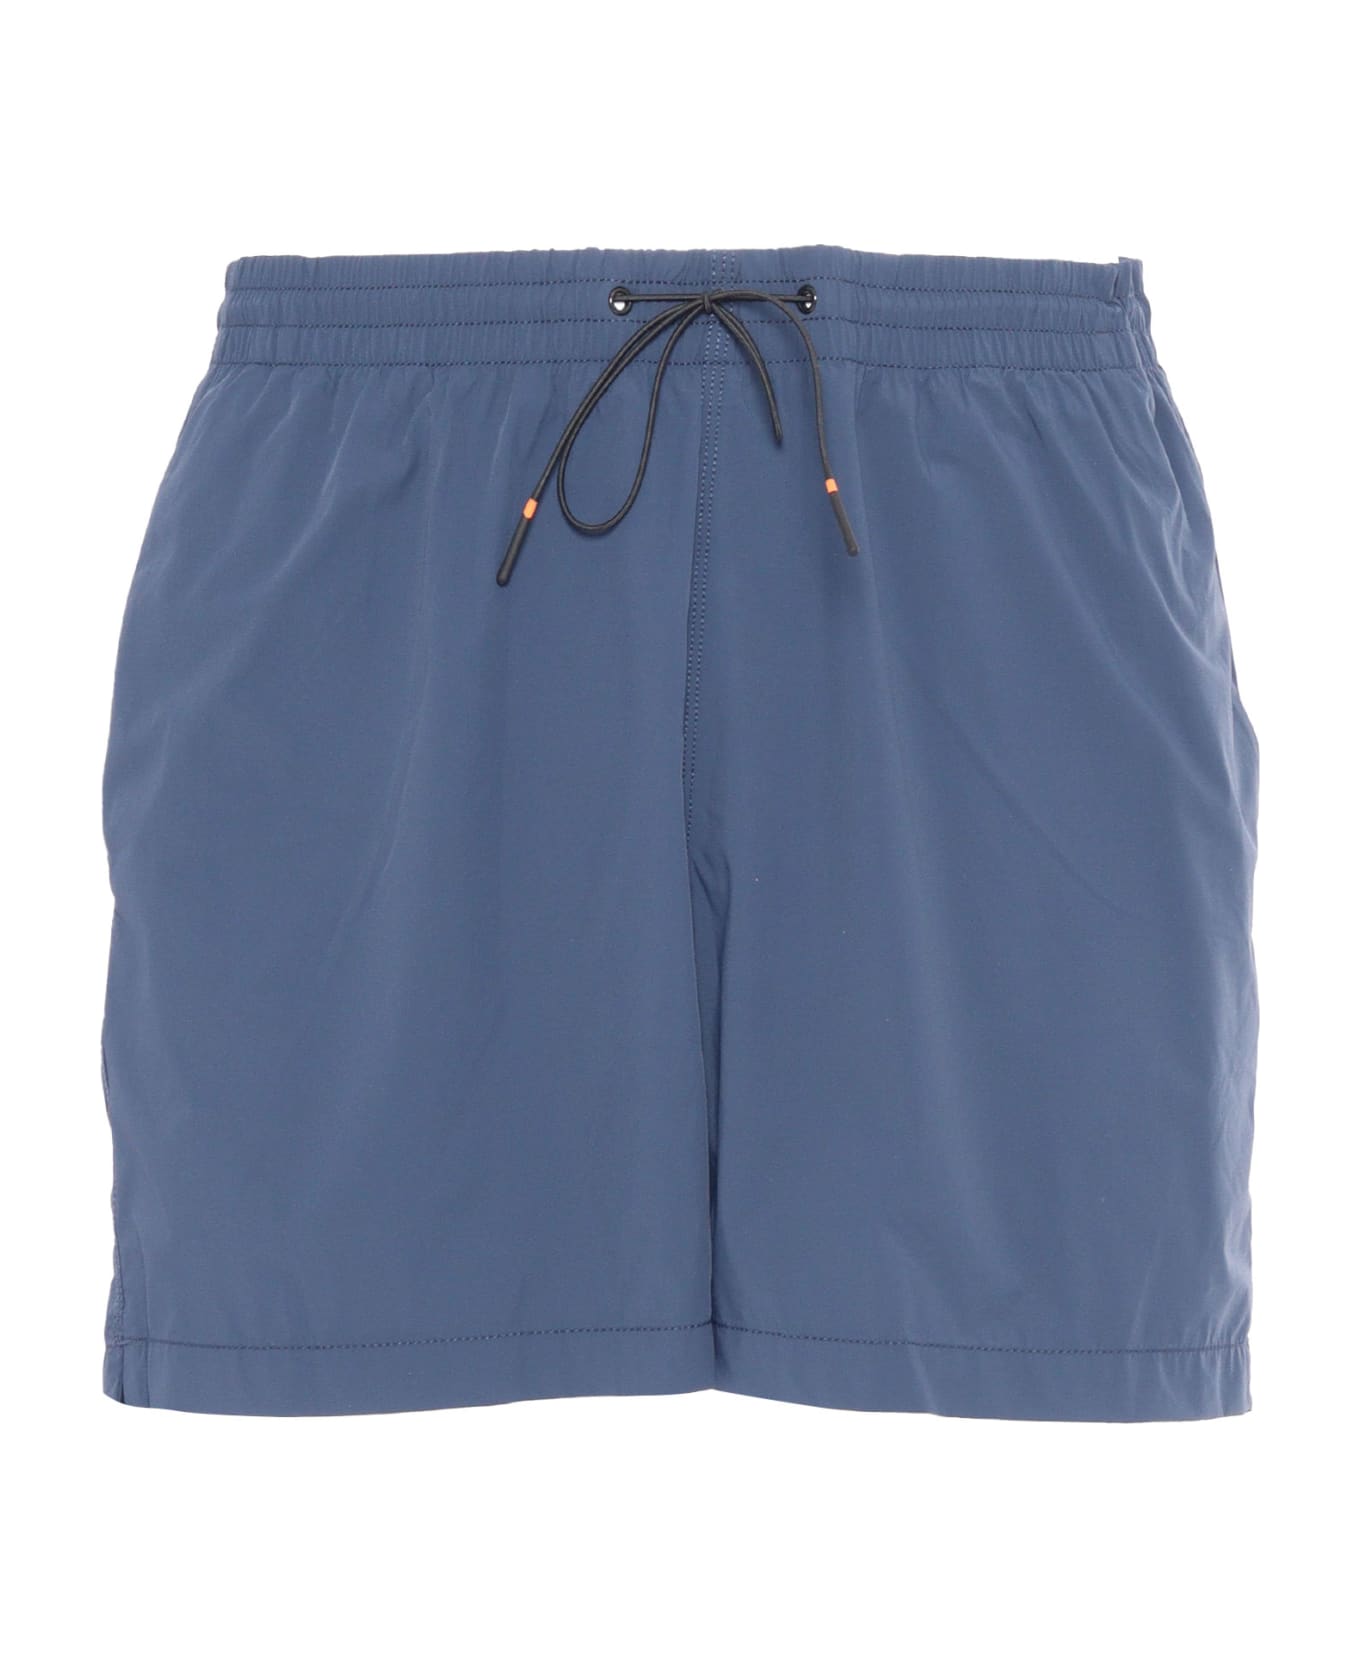 RRD - Roberto Ricci Design Blue Summer Urban Tramontana Shorts - BLUE